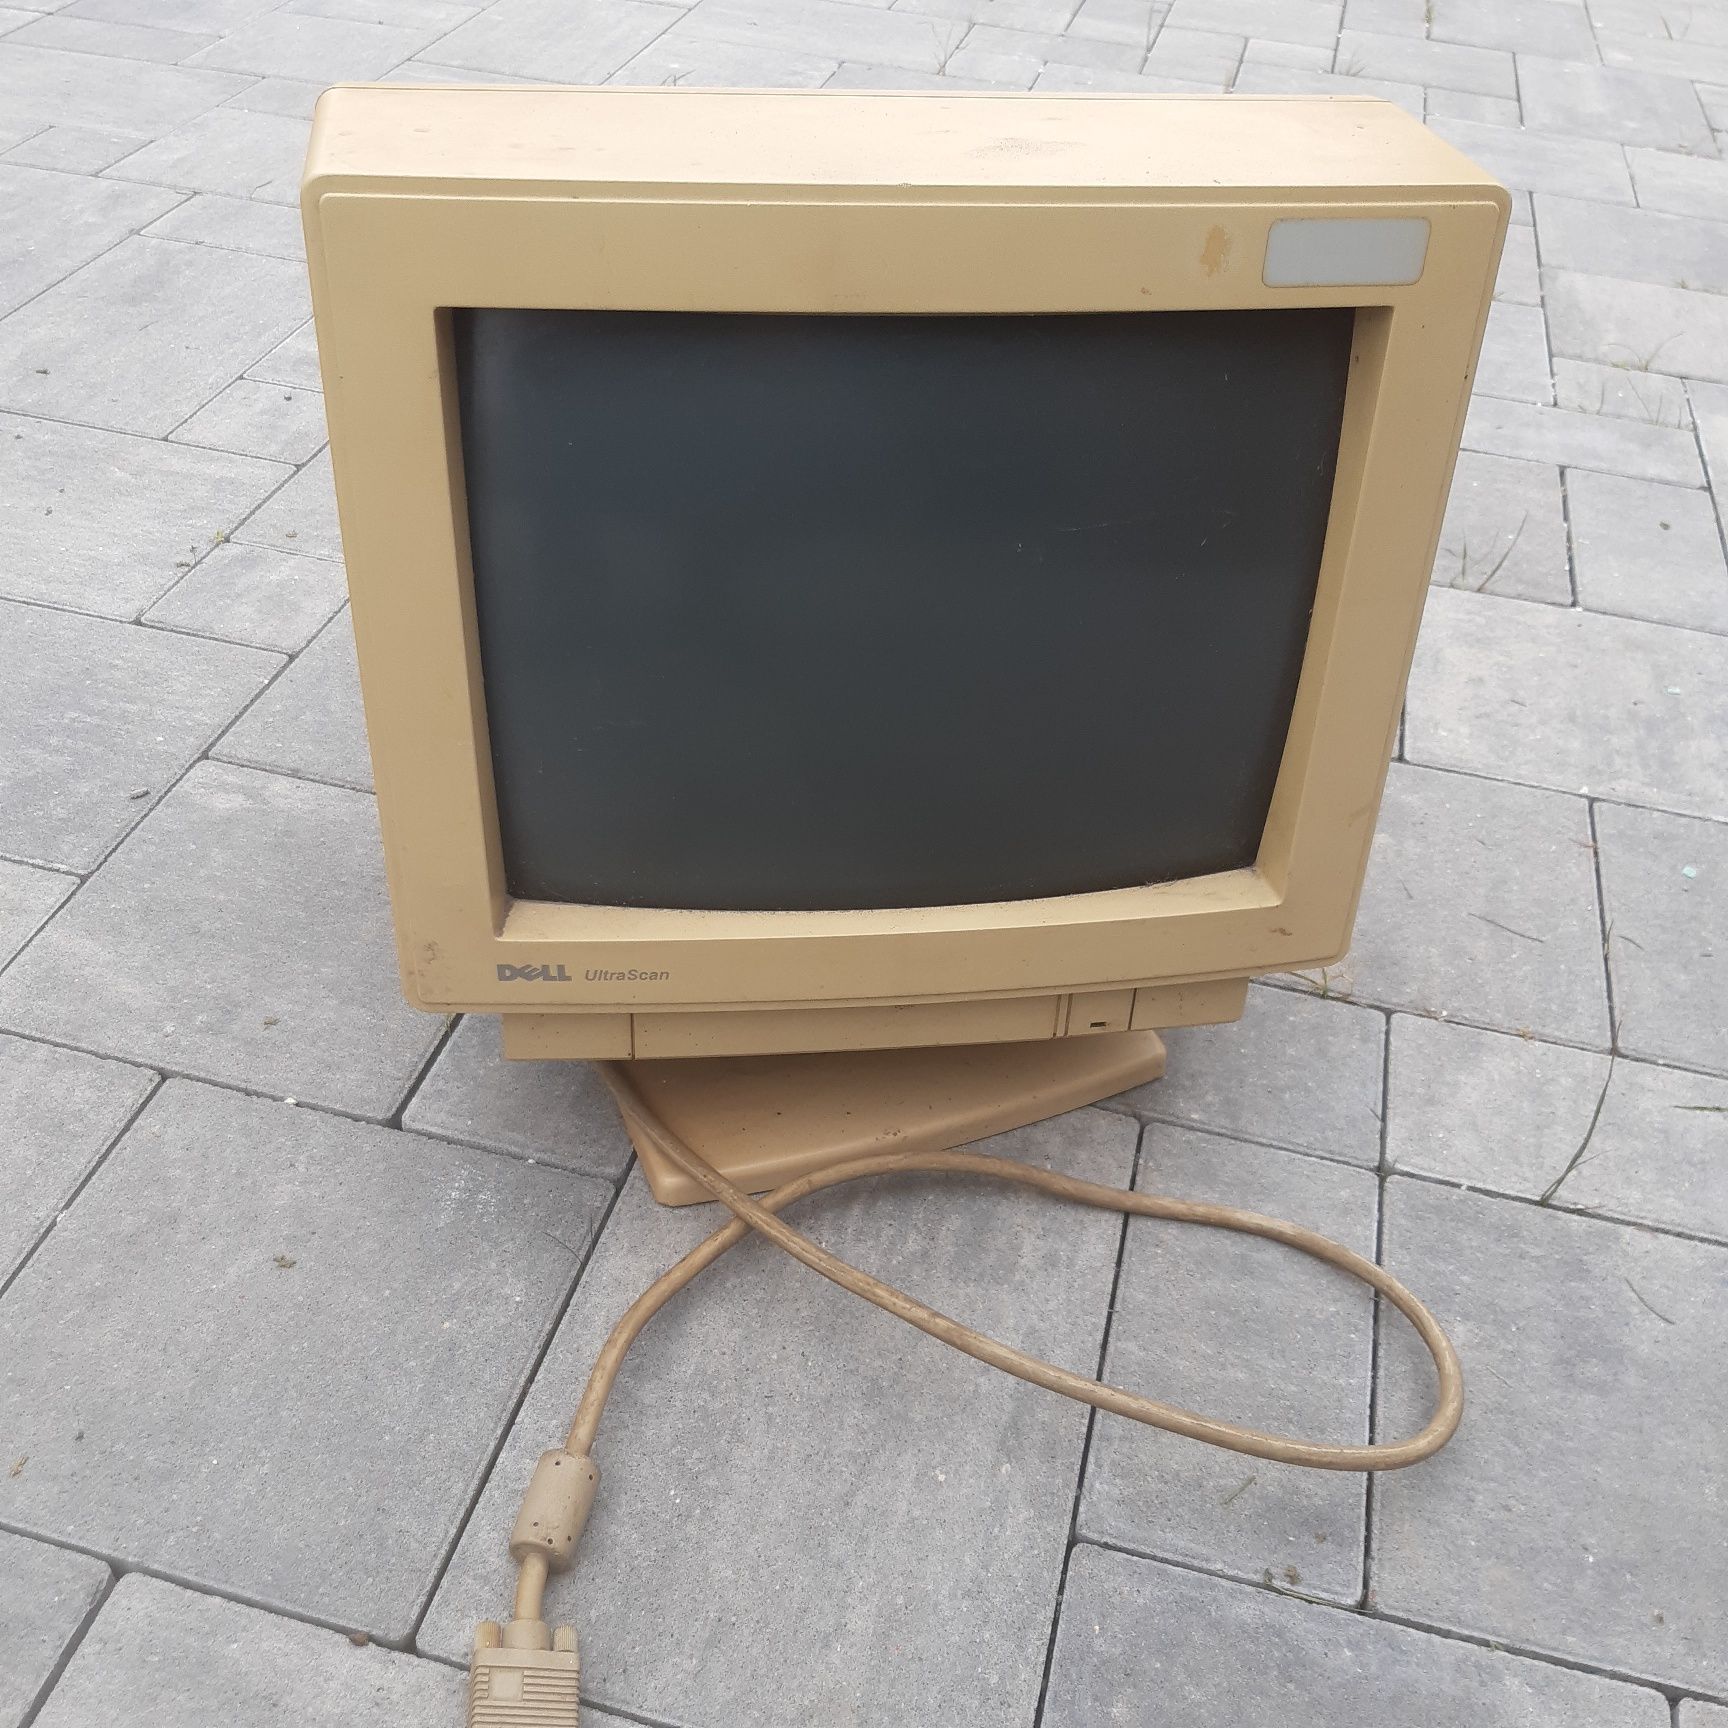 Starego typu monitor, Retro,stara technologia, klasyk